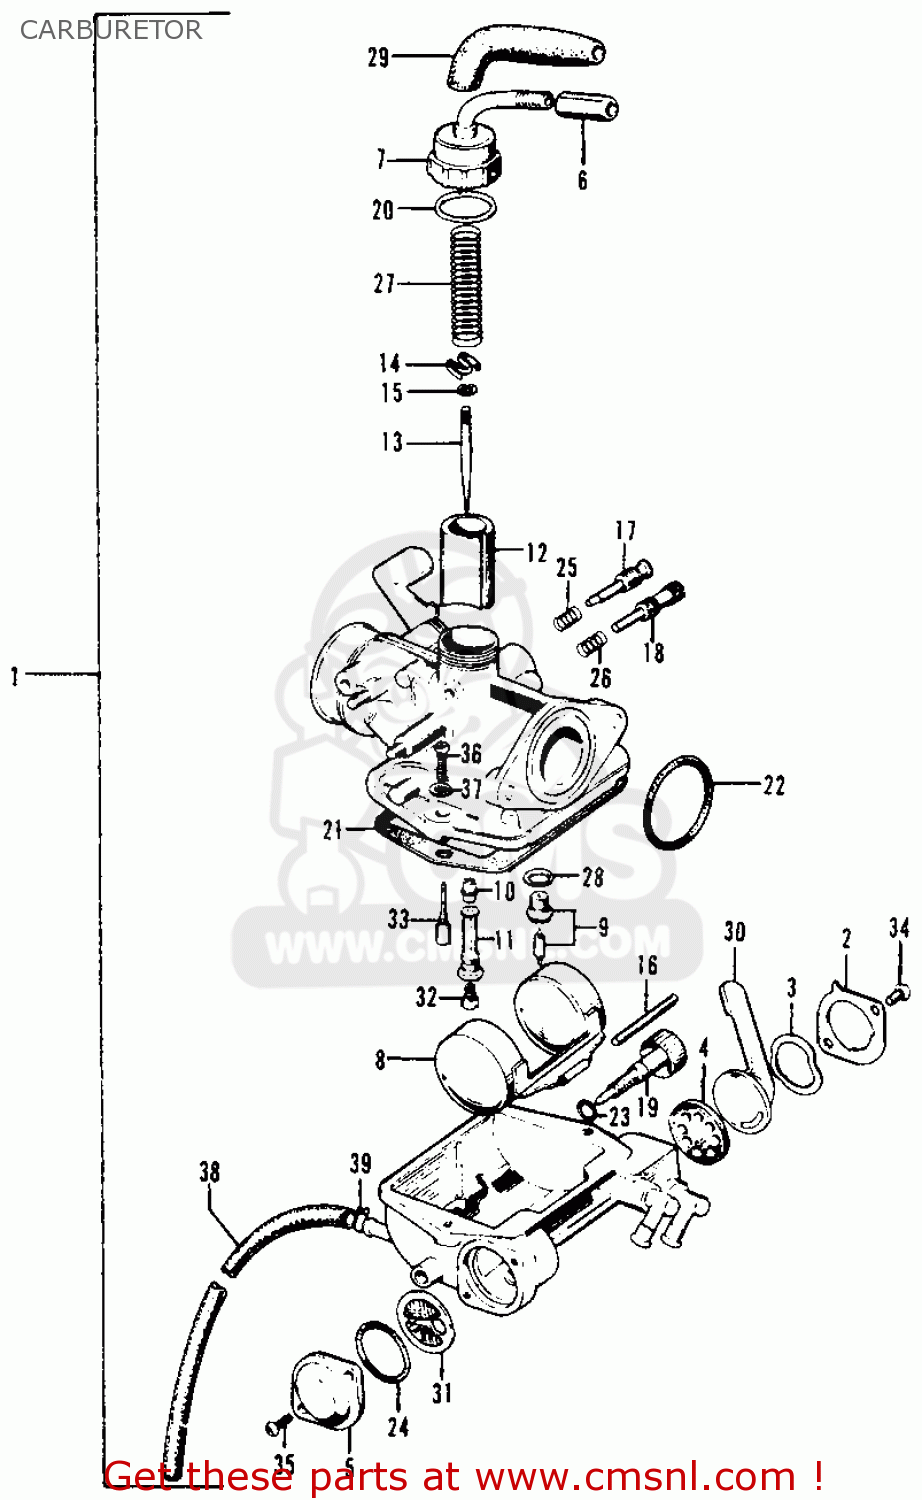 Honda 70 carburetor adjustment pdf #1